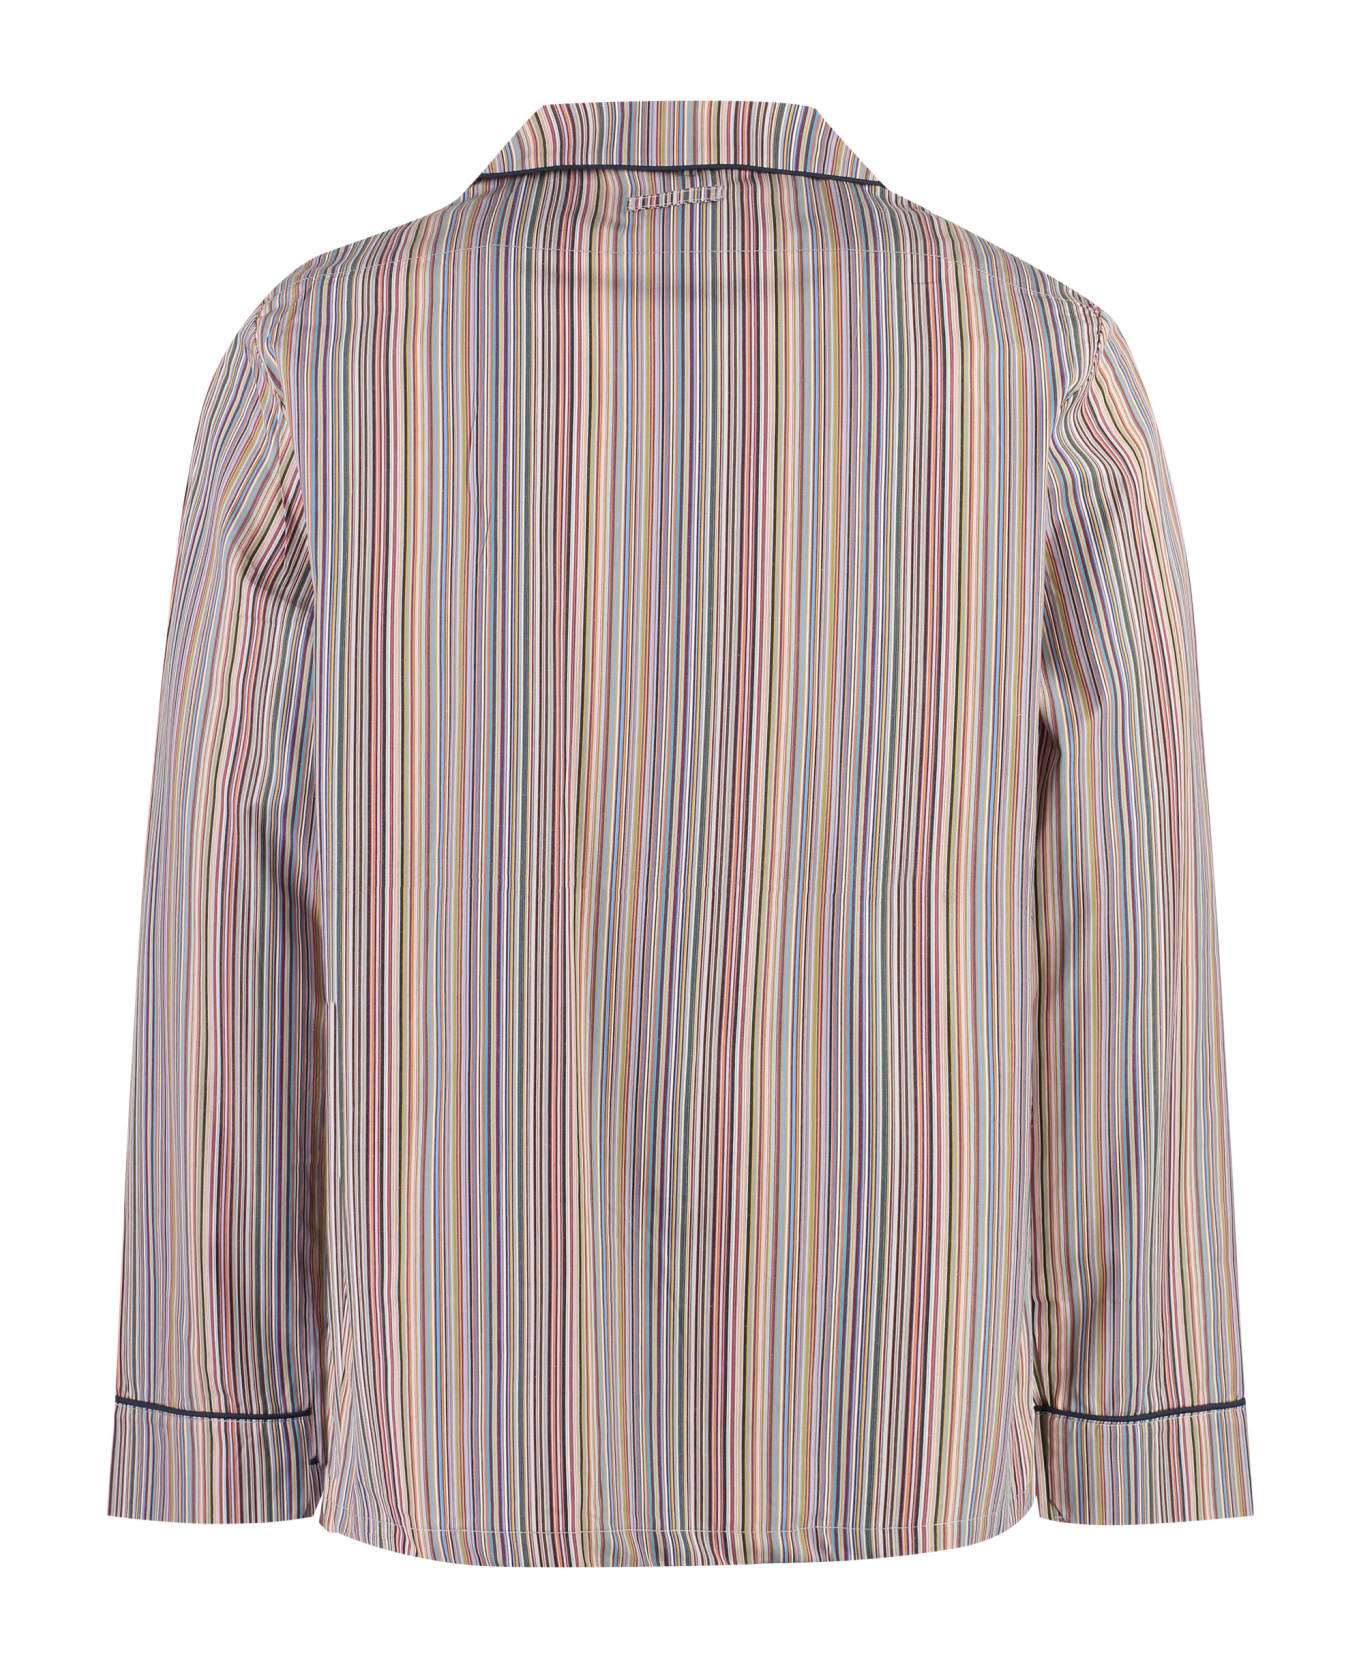 PS by Paul Smith Striped Cotton Pyjamas - Multicolor